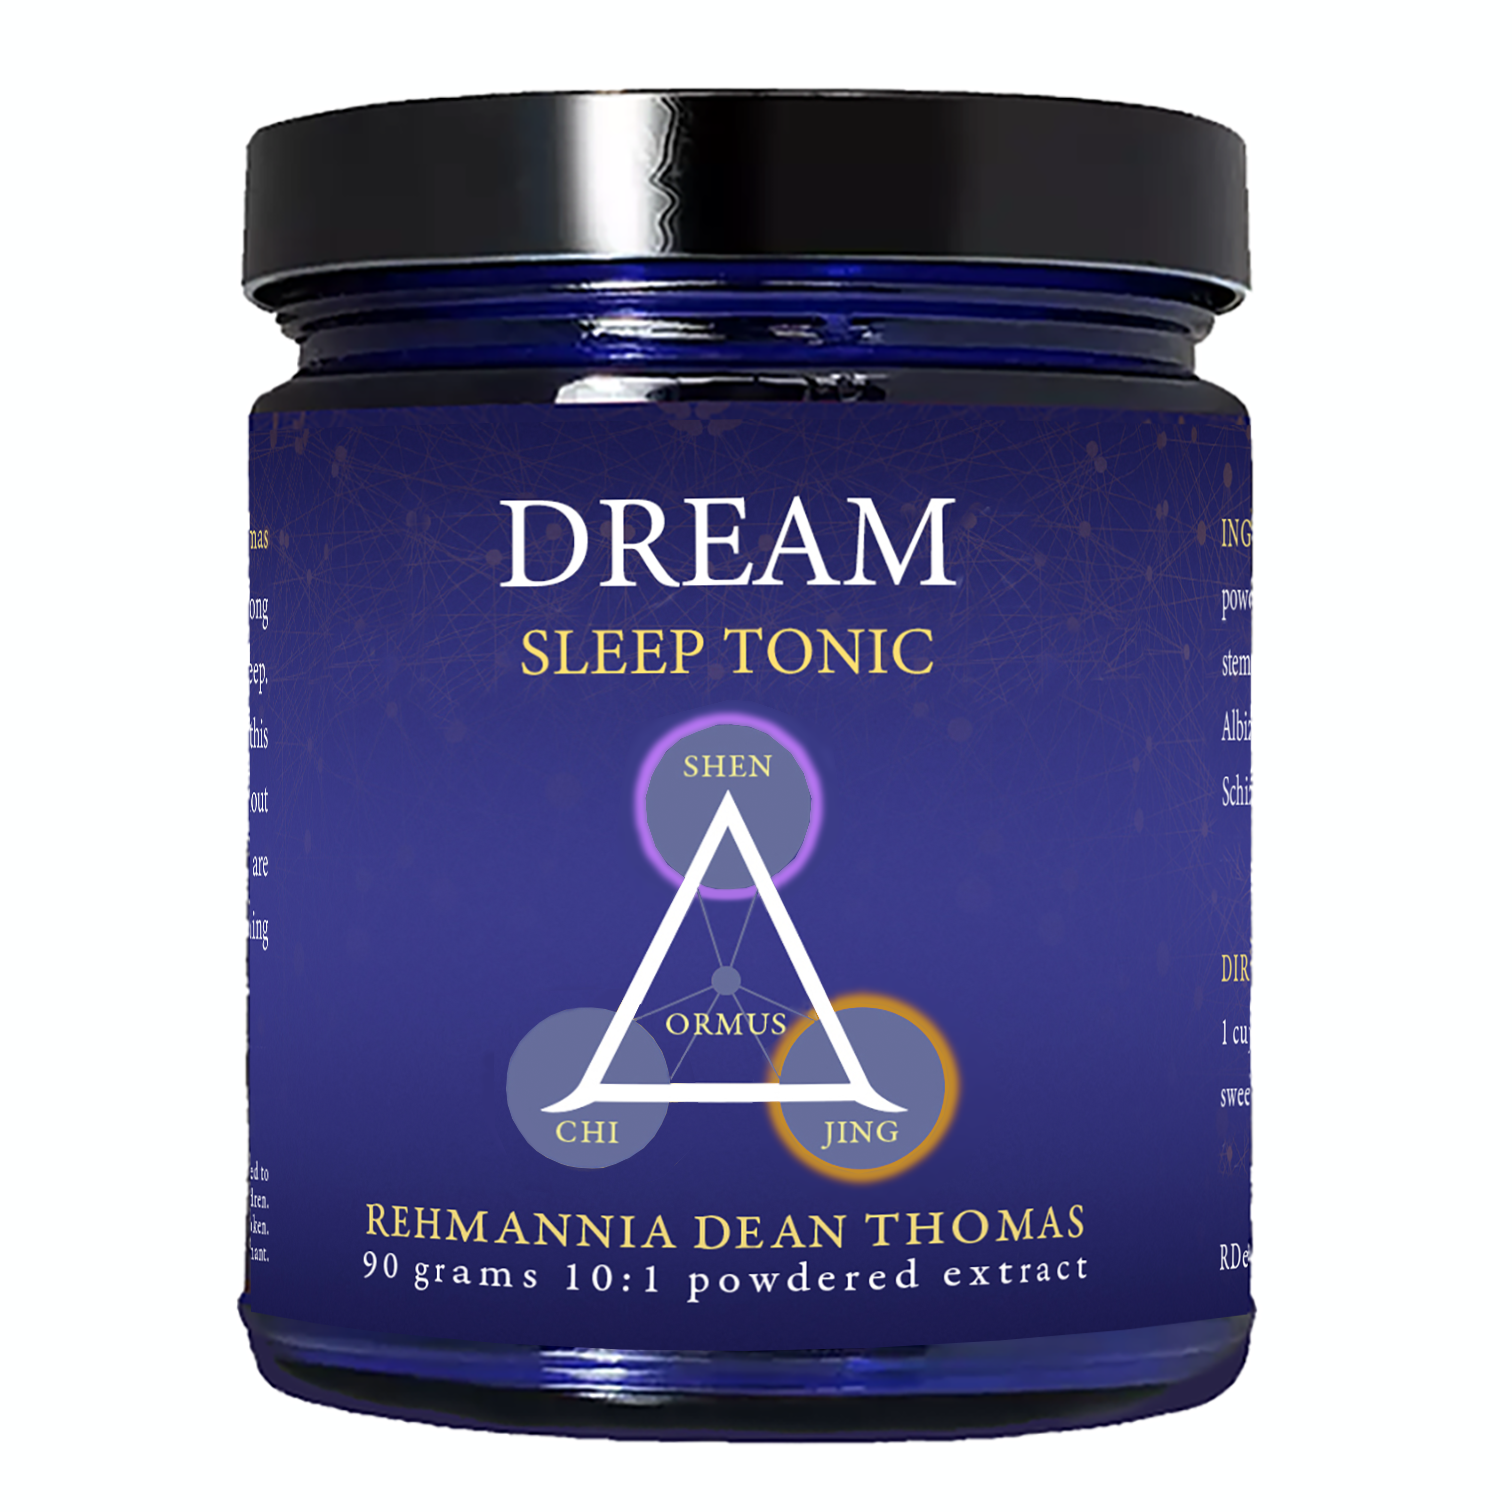 DREAM Sleep Tonic